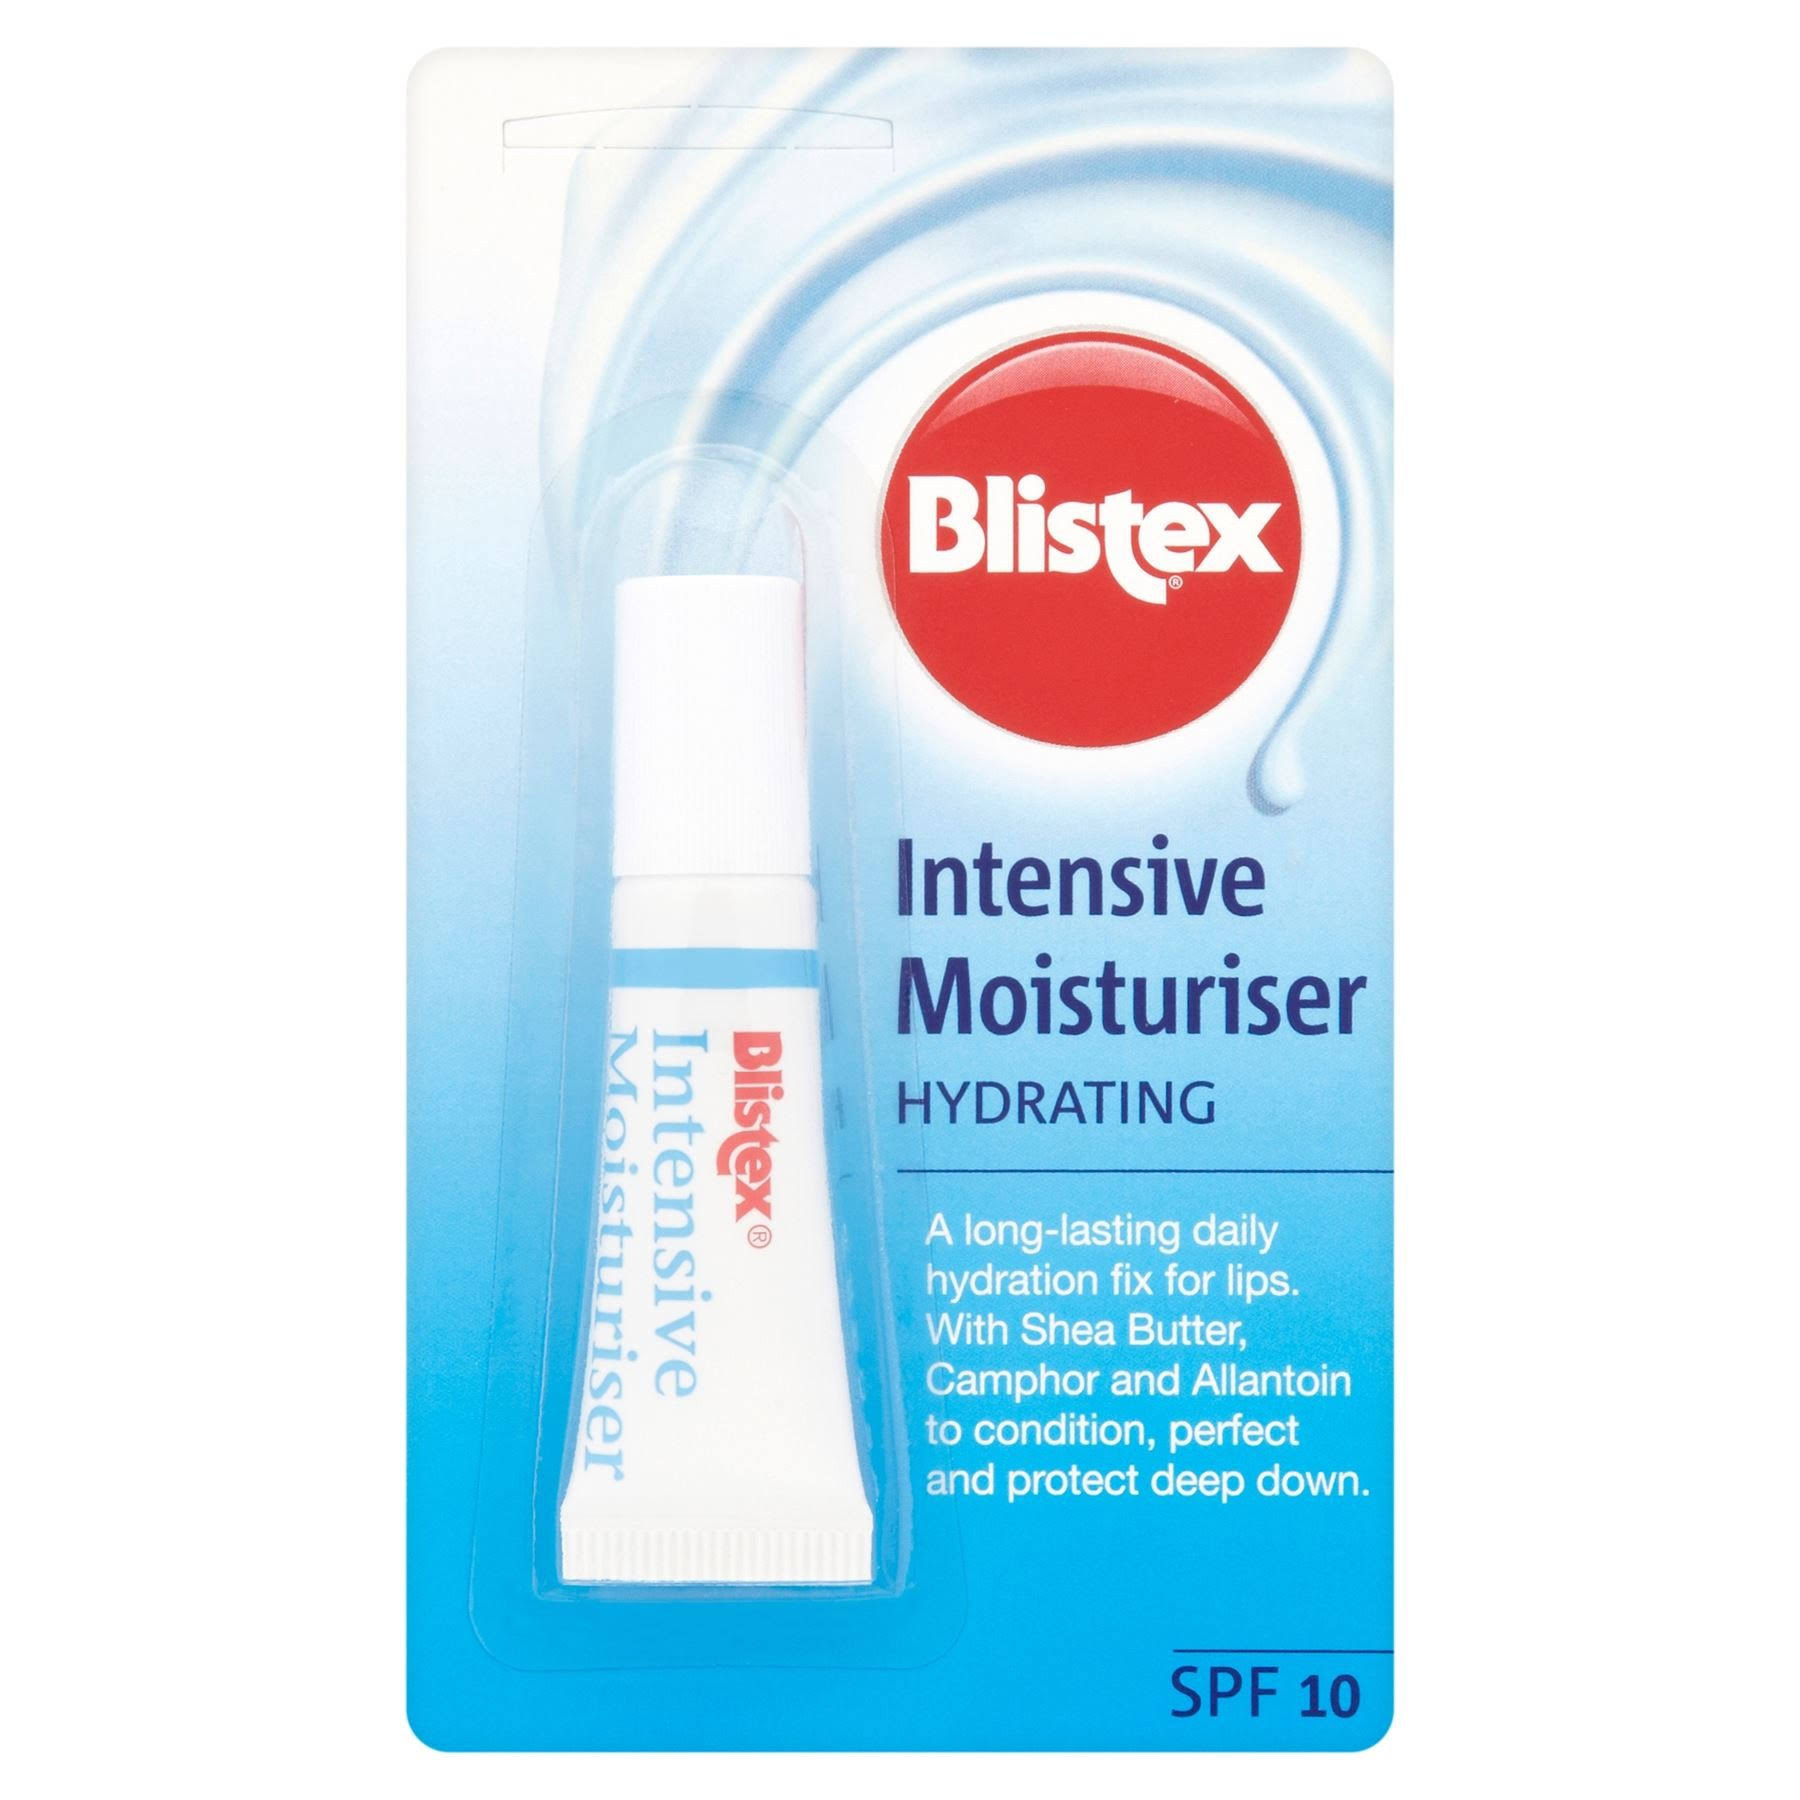 Blistex Intensive Hydrating Moisturiser - SPF 10, 5g